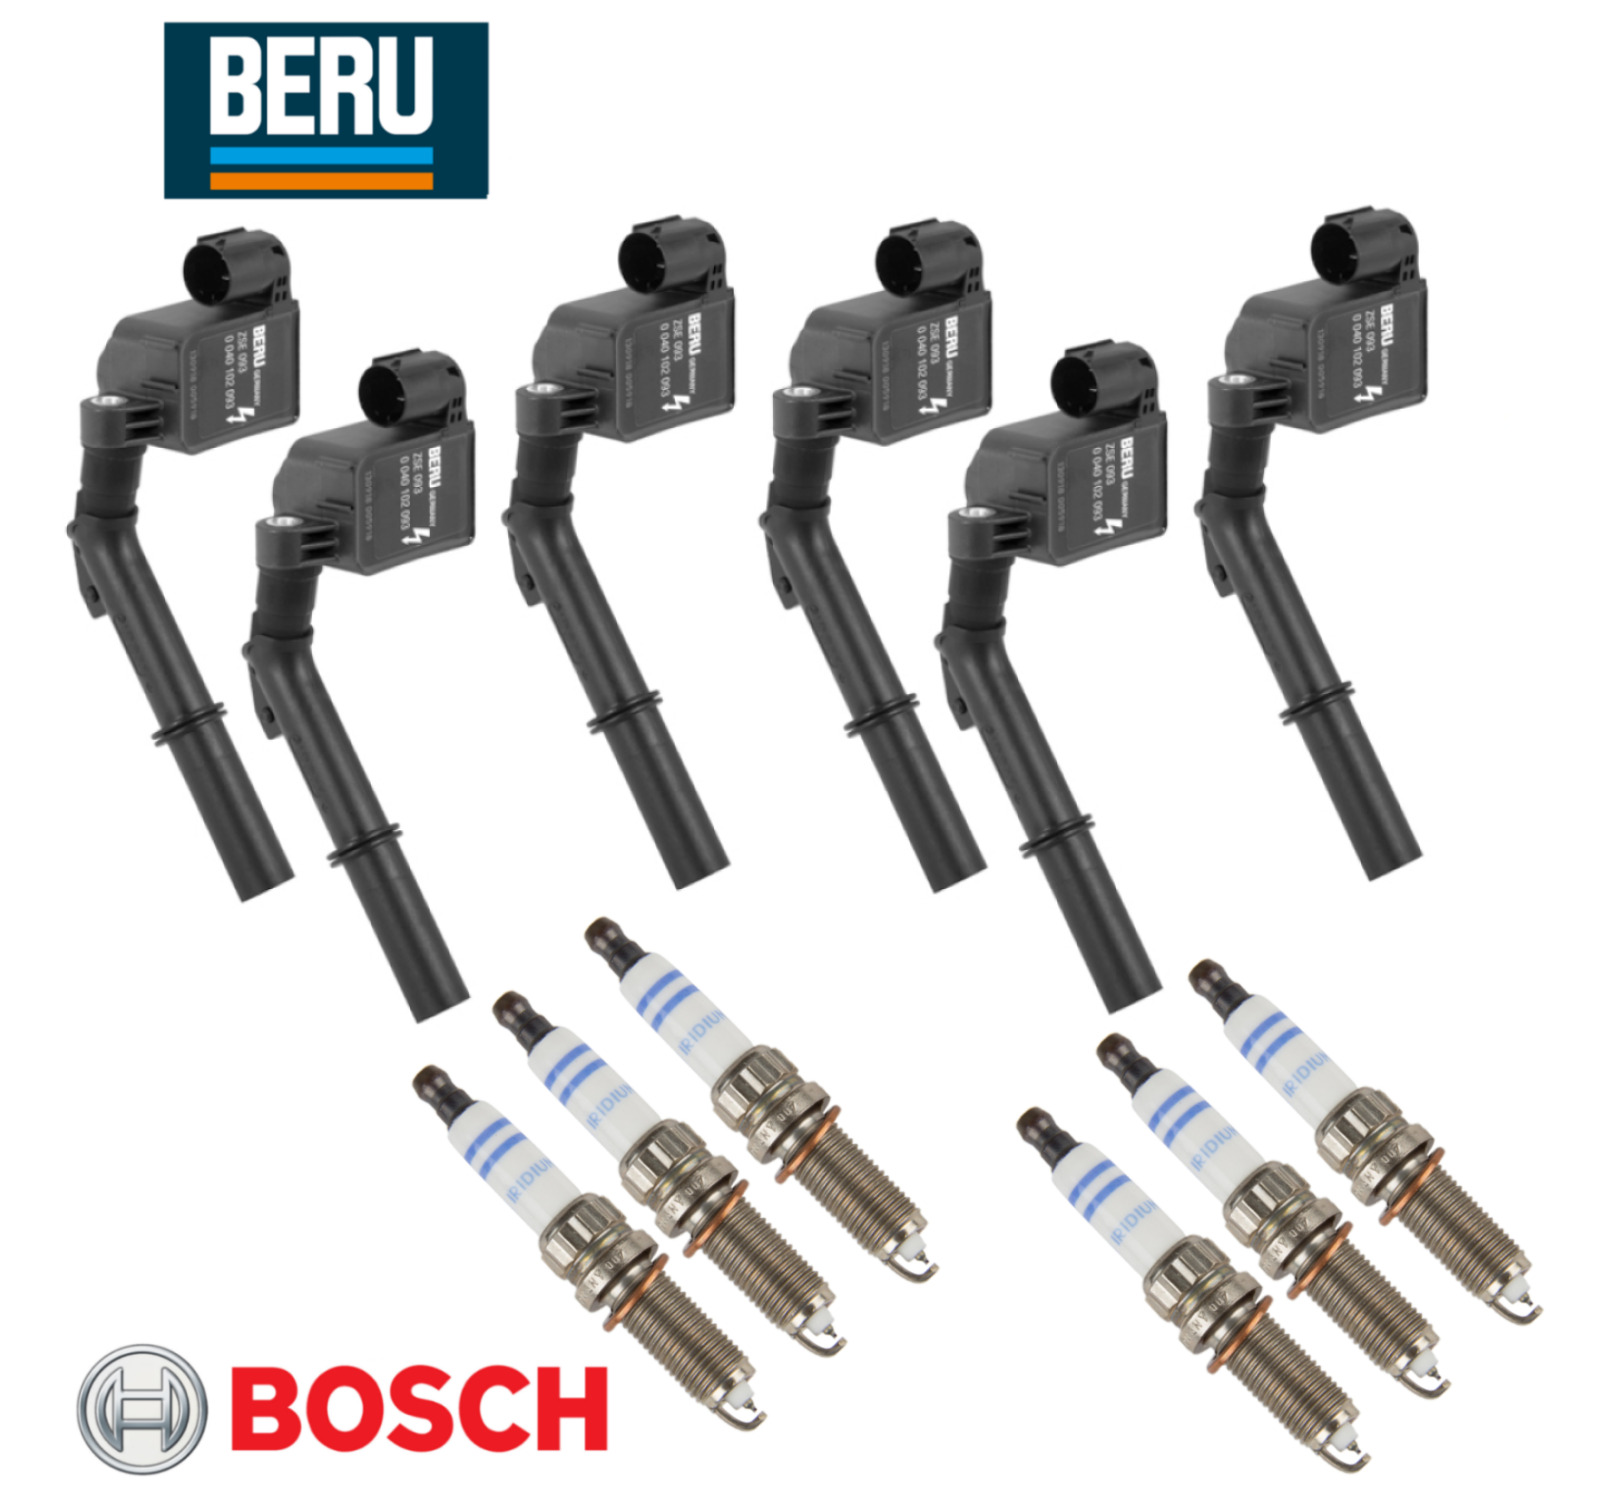 OEM Ignition Coil + Spark Plug Double Iridium (6sets) Beru Bosch for Mercedes V6